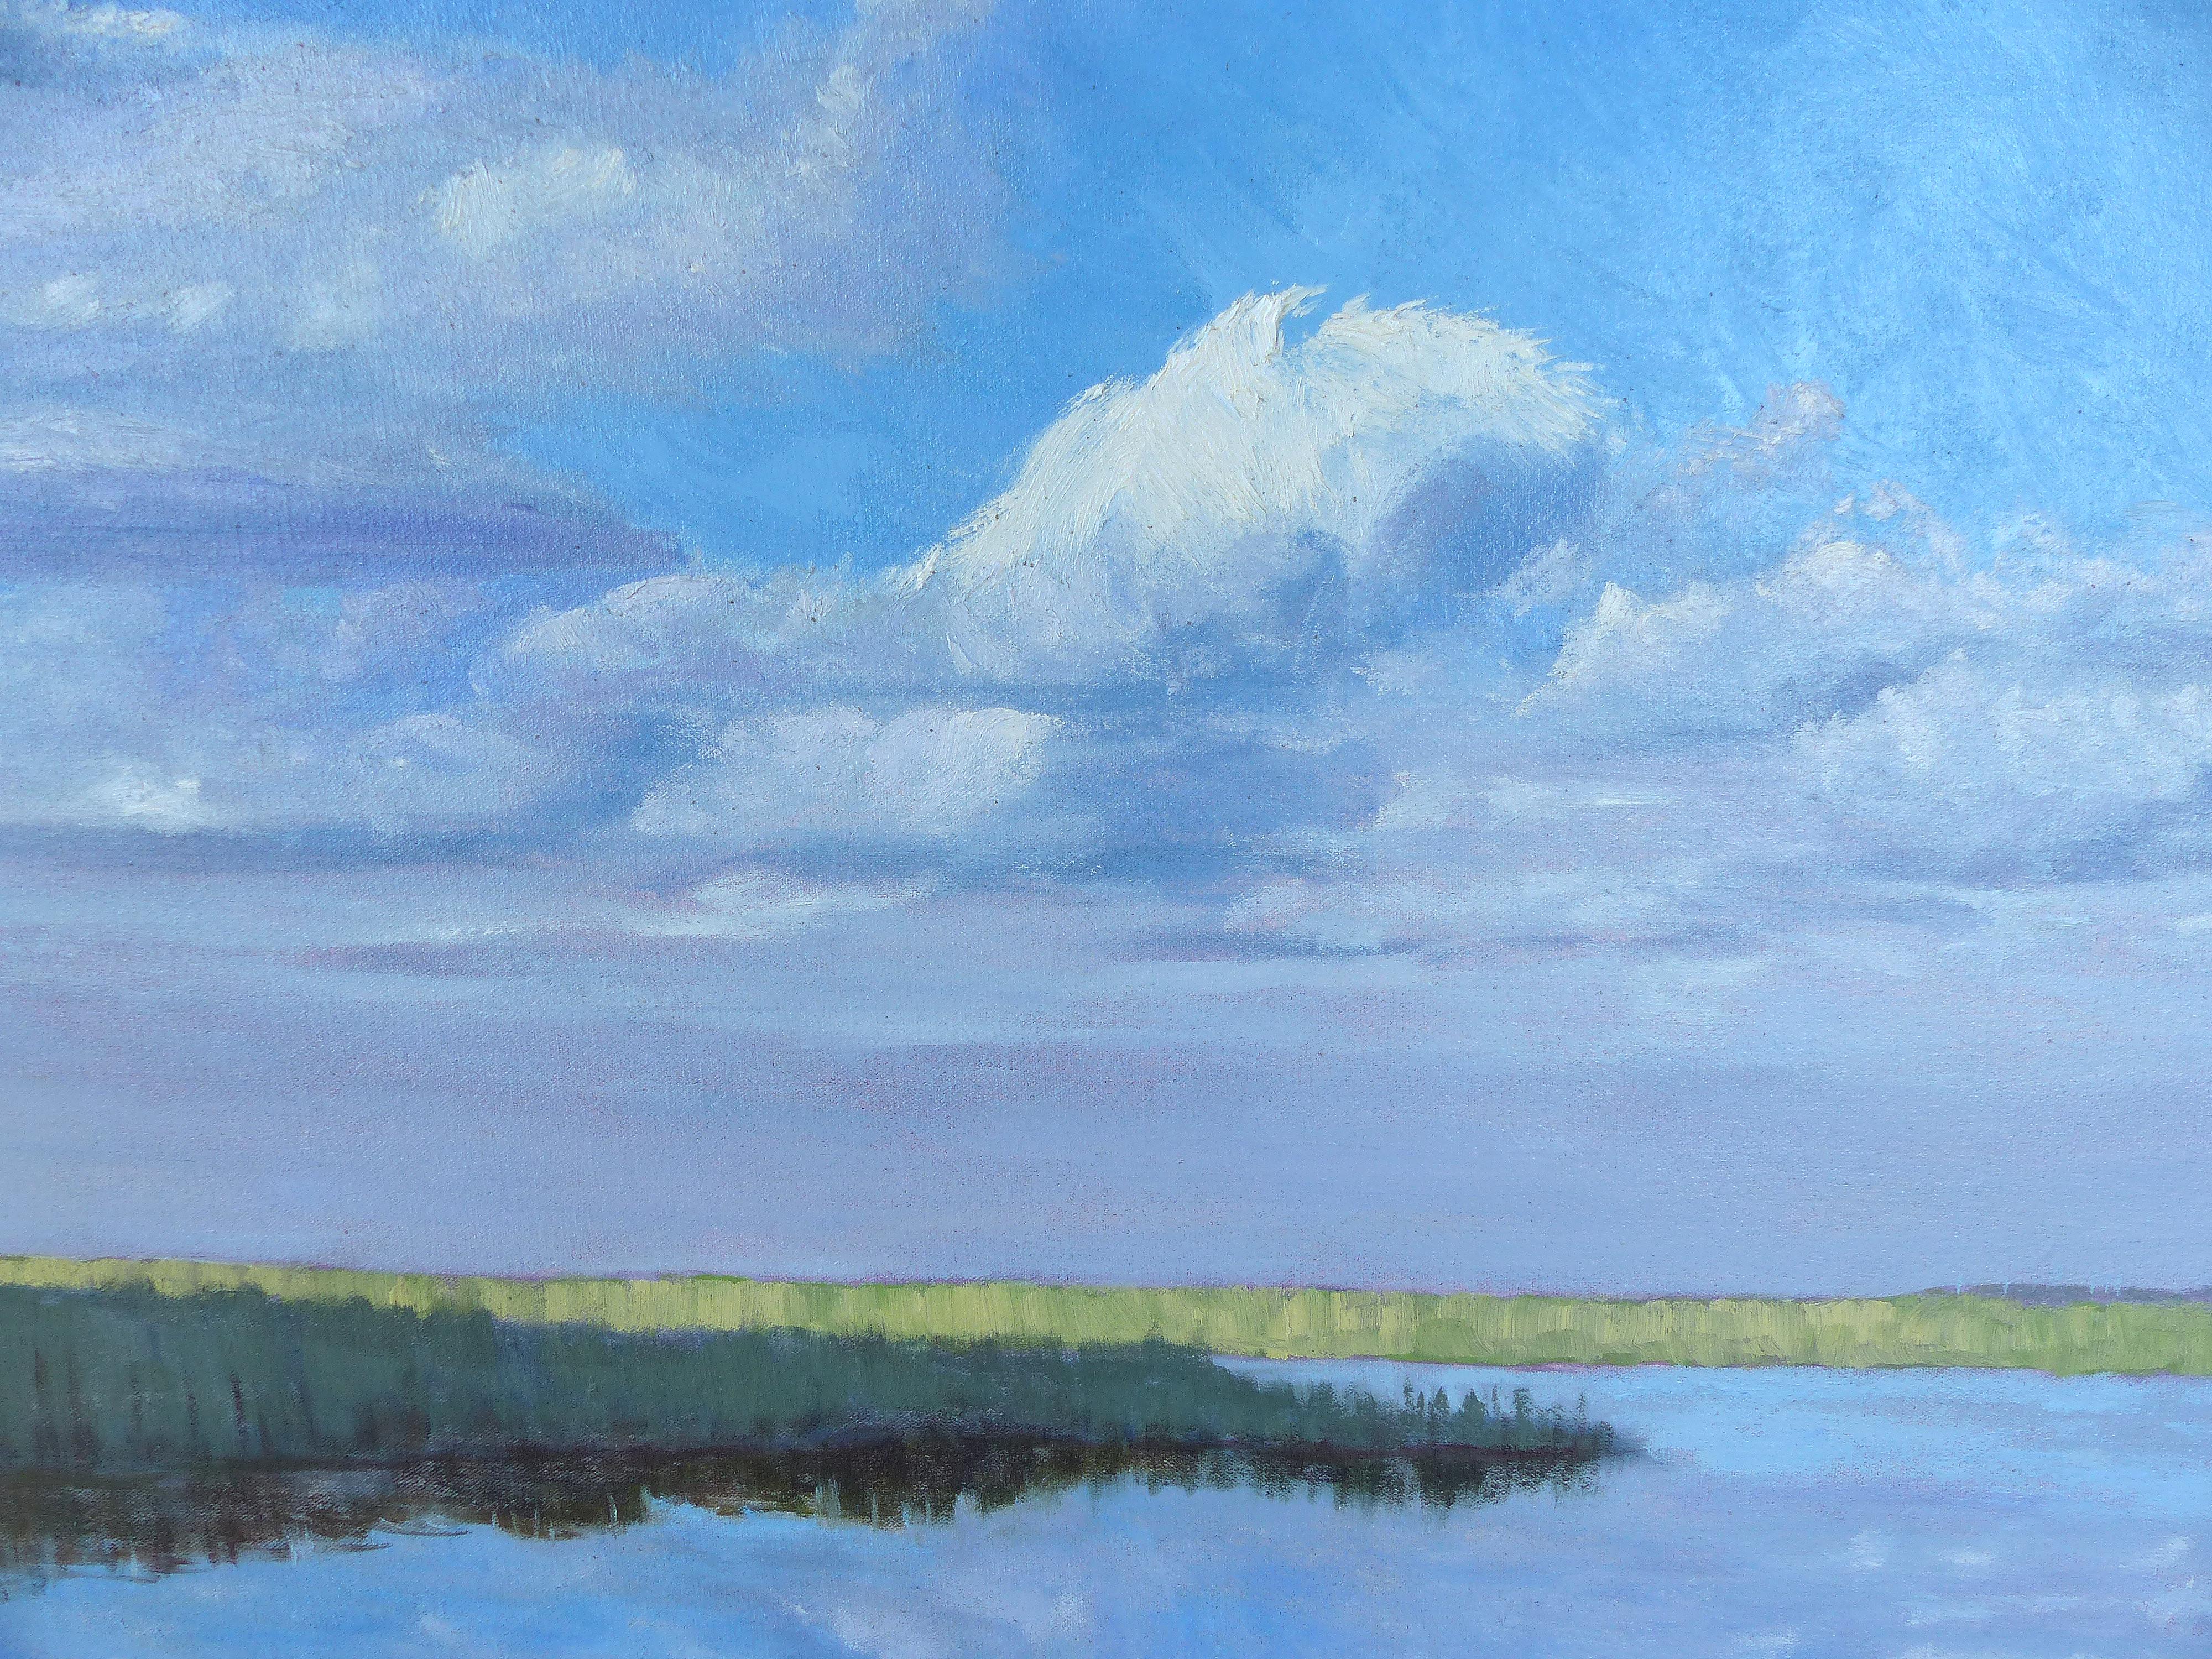 Offered for sale is a Florida landscape of Everglades National Park titled 